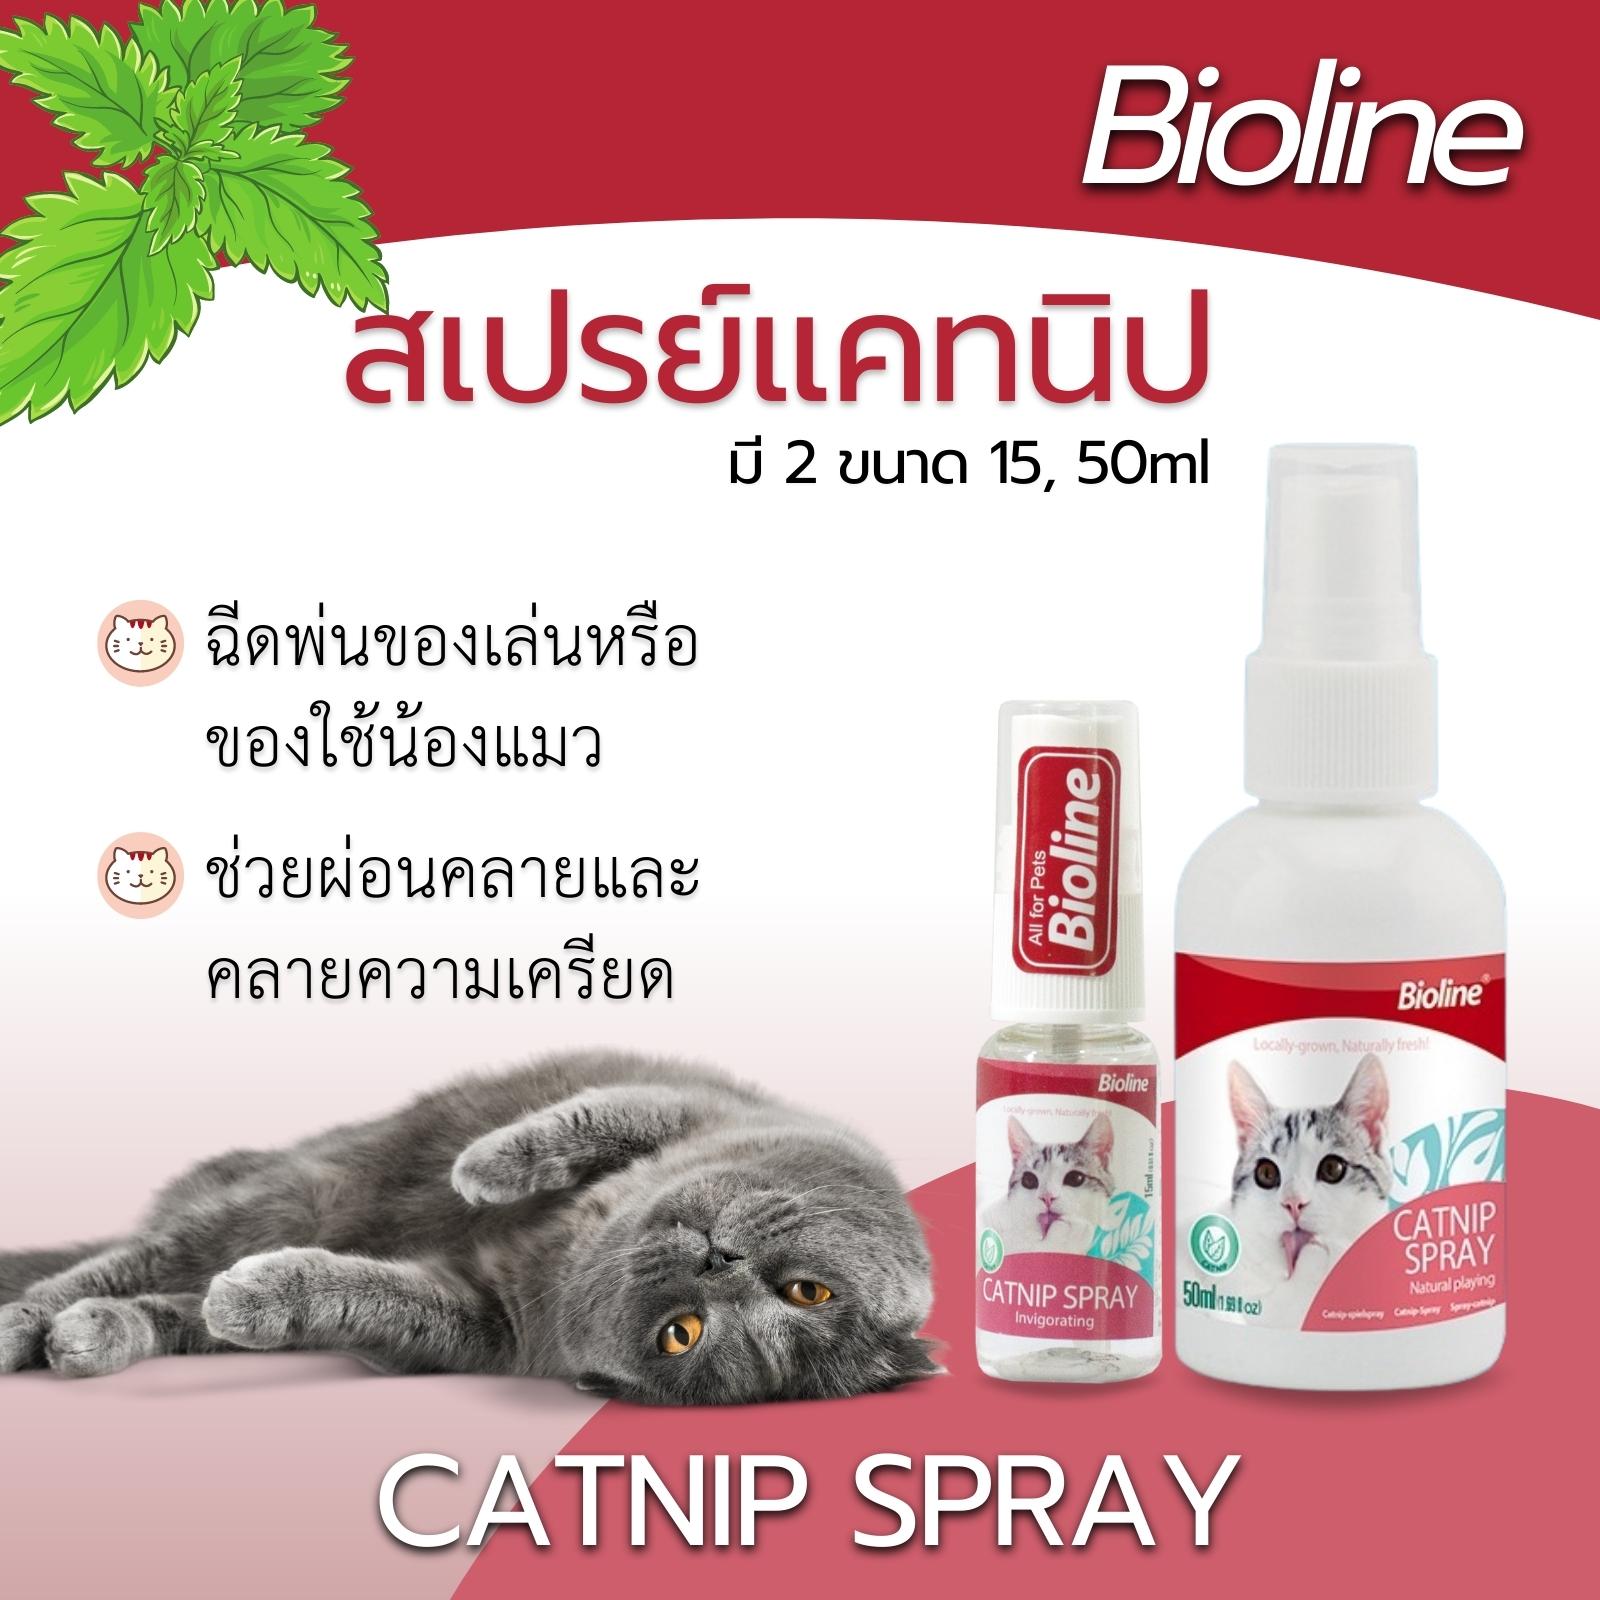 Bioline Catnip Spray สเปรย์แคทนิป ฉีดพ่นของเล่นหรือของใช้น้องแมว ช่วยผ่อนคลายและคลายความเครียด ขนาด 15, 50ml